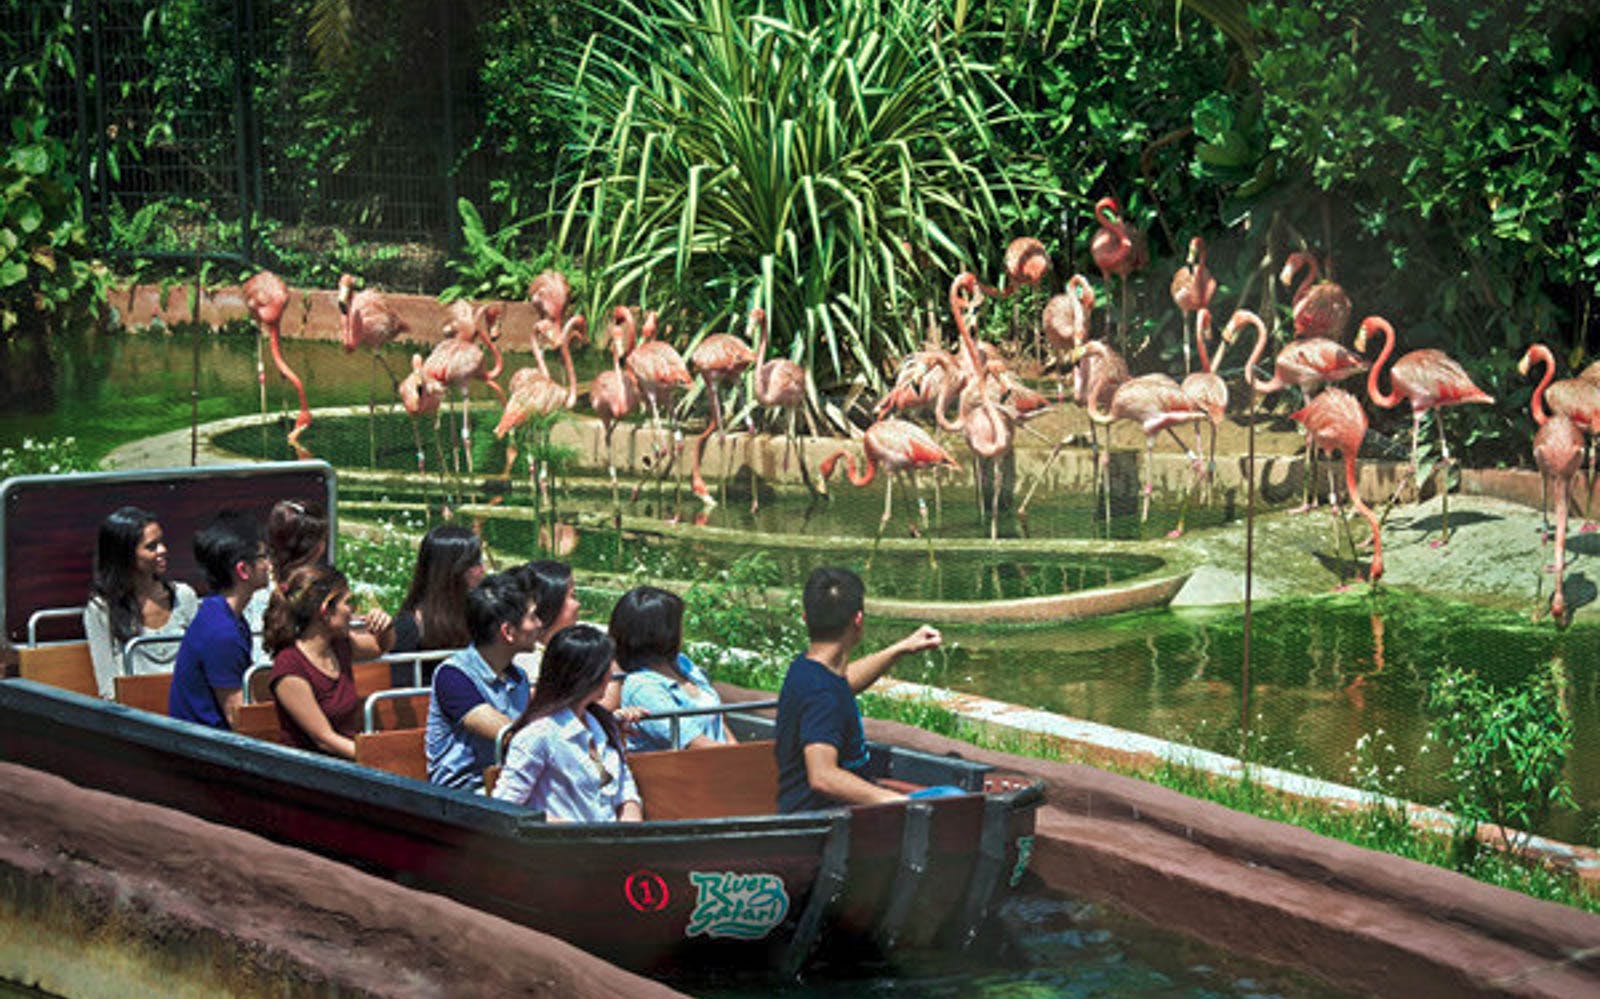 safari world bangkok tour